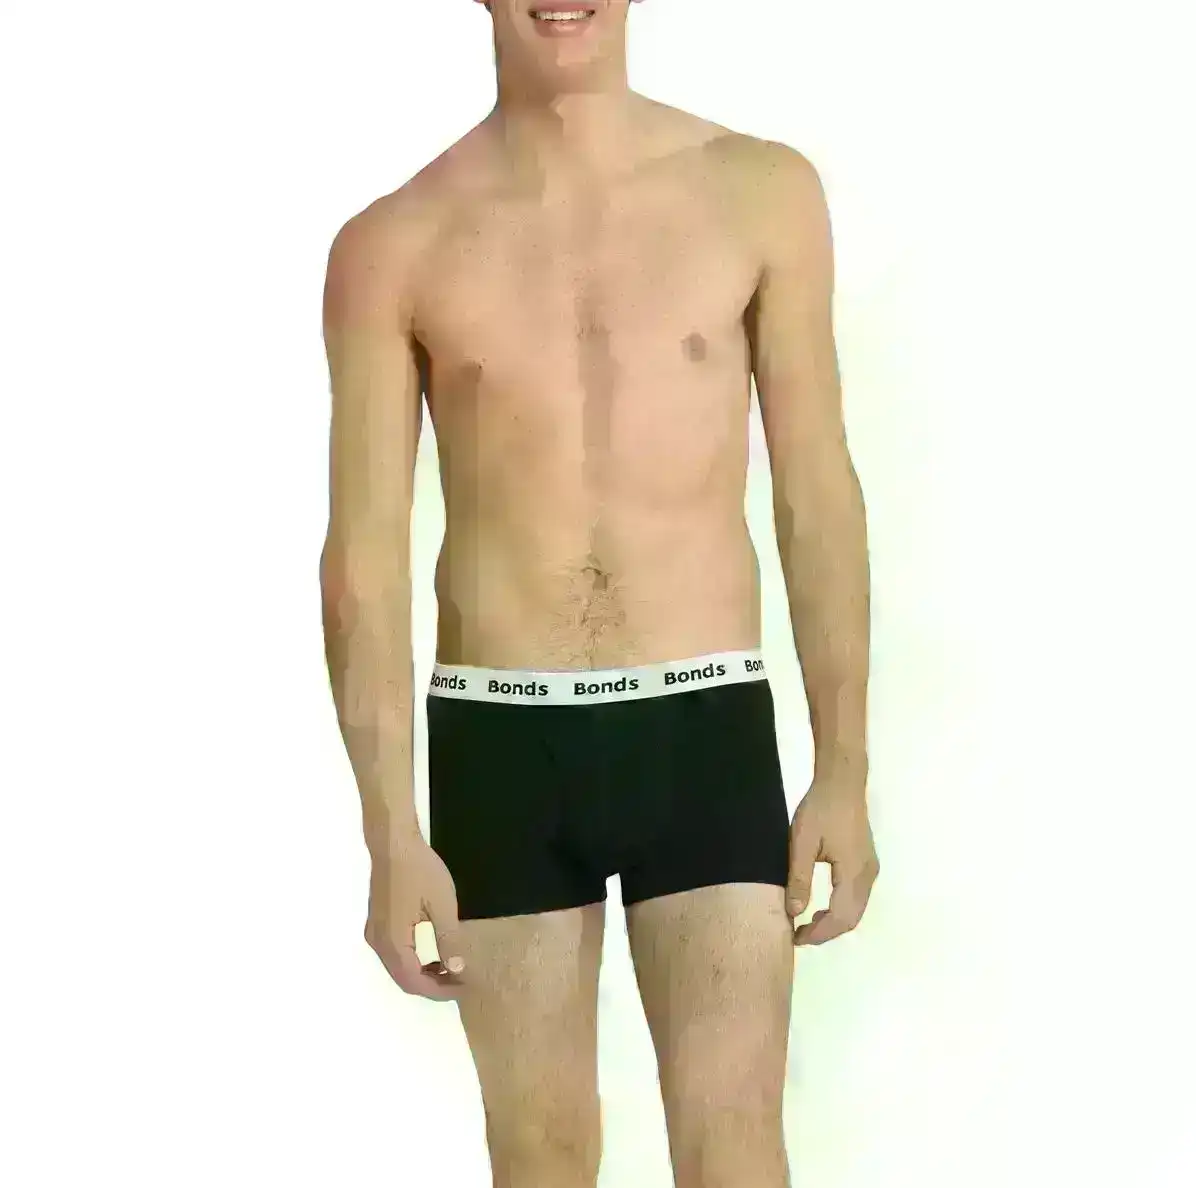 20 X Bonds Everyday Trunks Mens Underwear Assorted Shorts Briefs Jocks